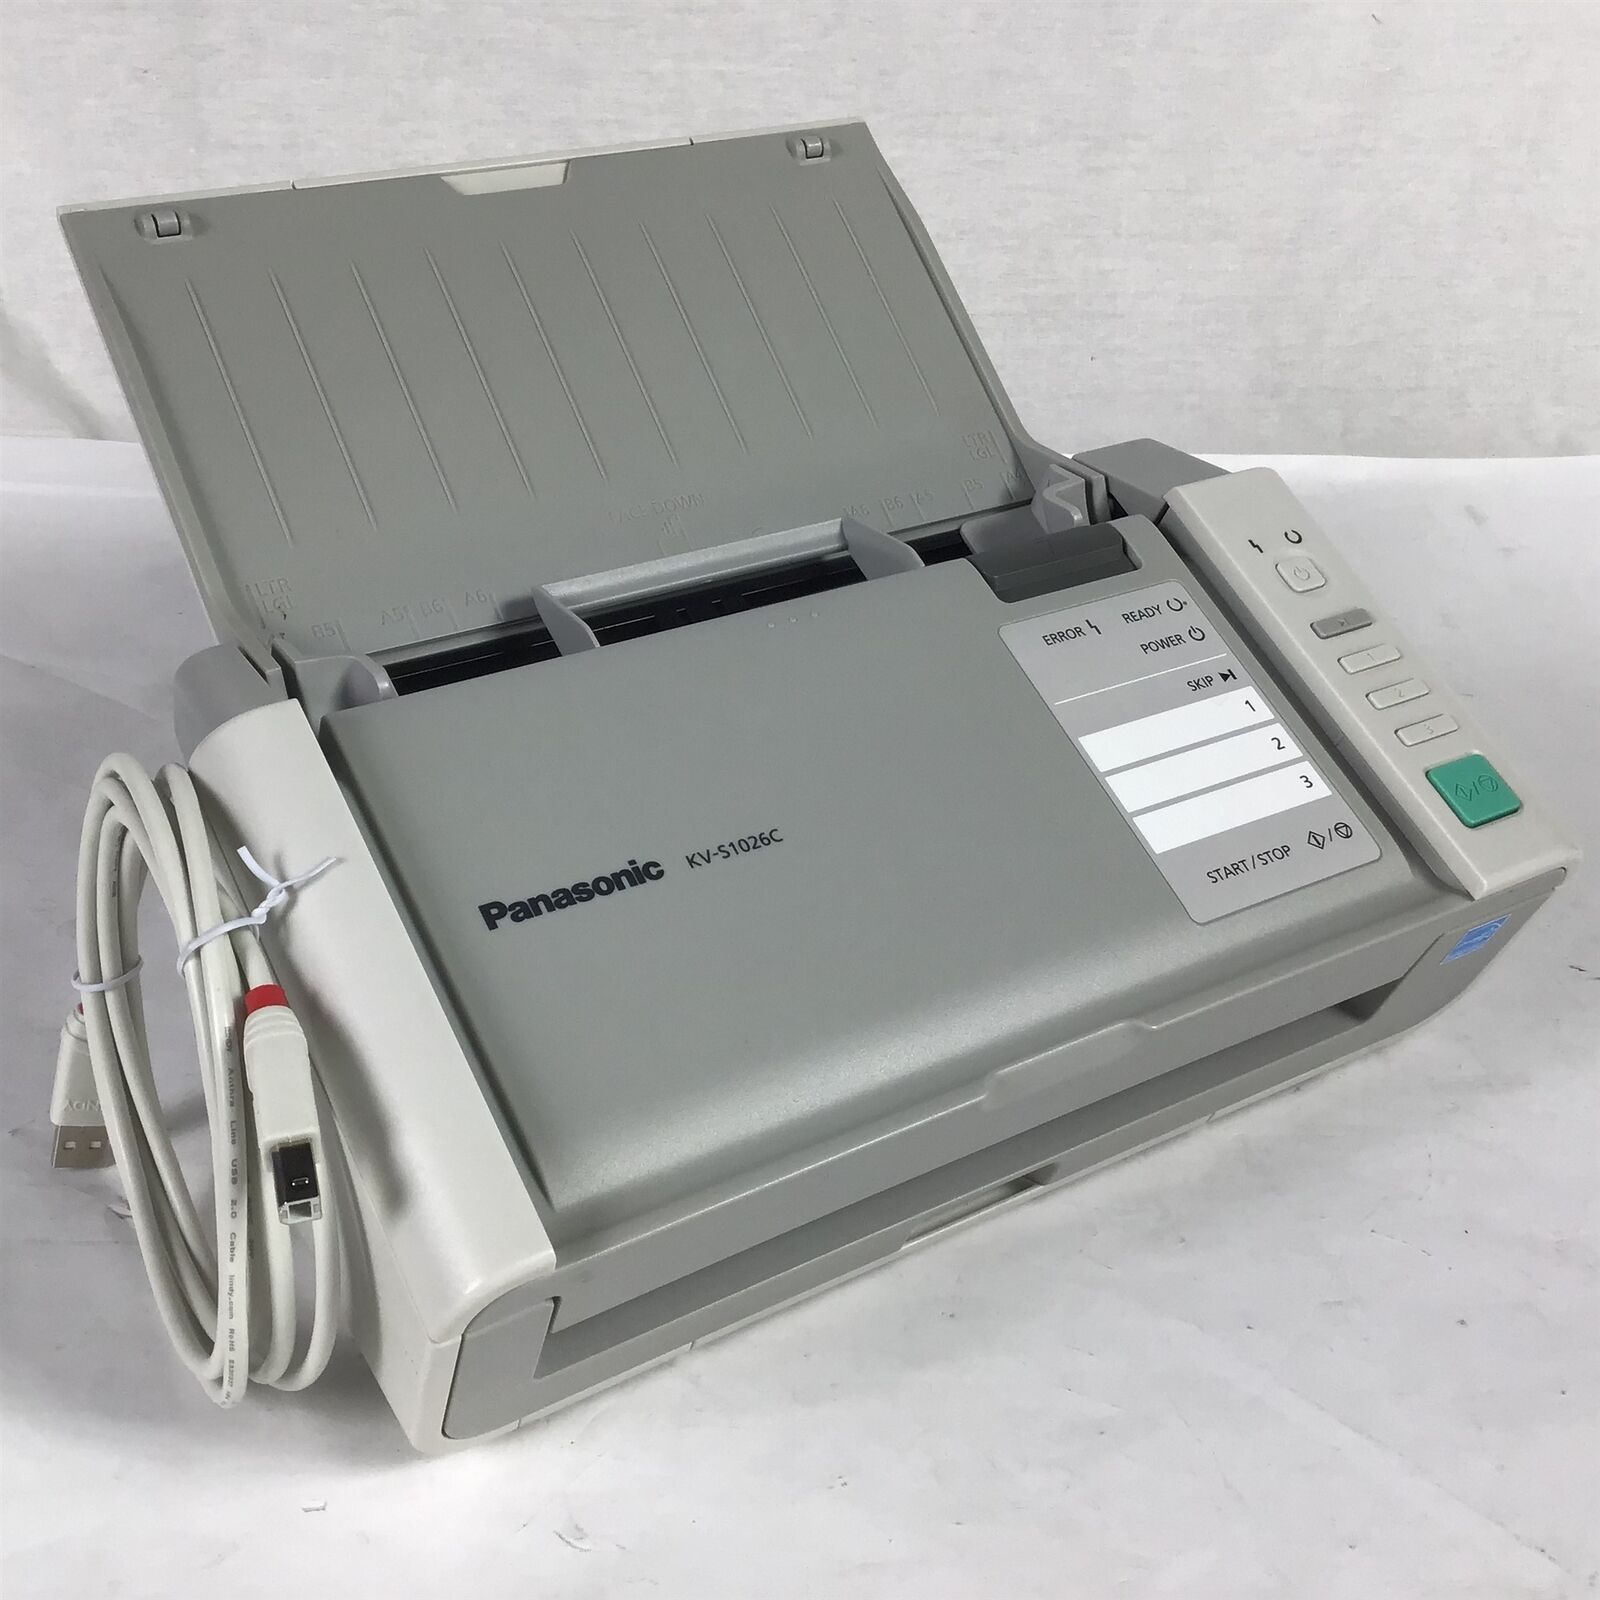 Panasonic KV-S1026C High Speed Duplex Color Document Scanner w/ USB -No Adapter